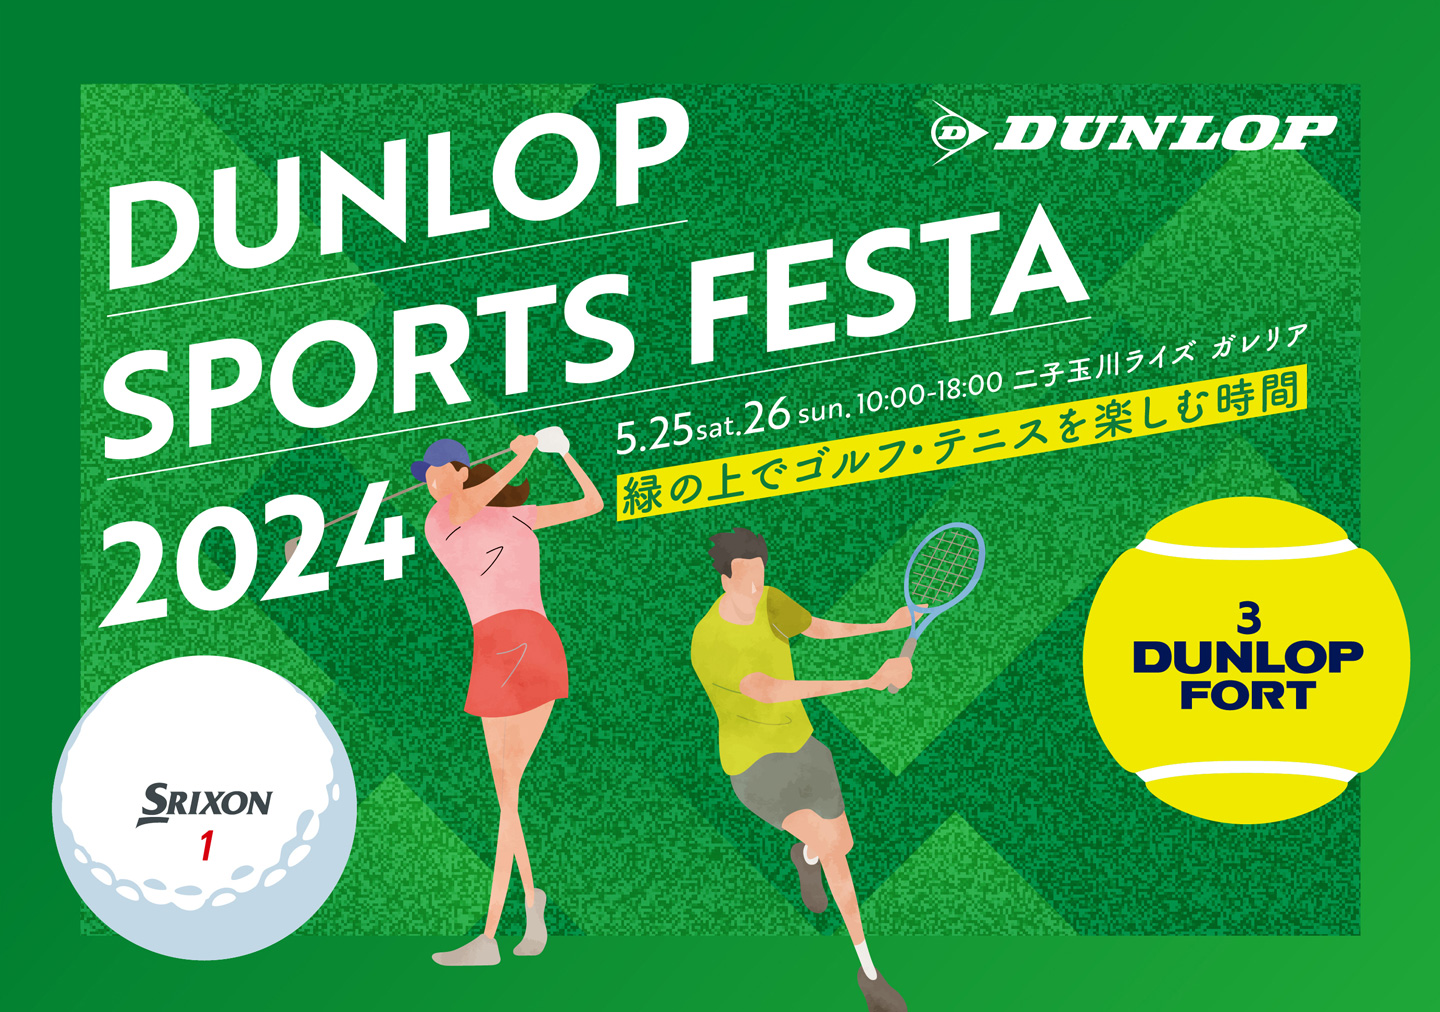 「DUNLOP SPORTS FESTA ～緑の上でゴルフ・テニスを楽しむ時間～」を二子玉川で開催  ～ゴルフ・テニスをもっと身近に～